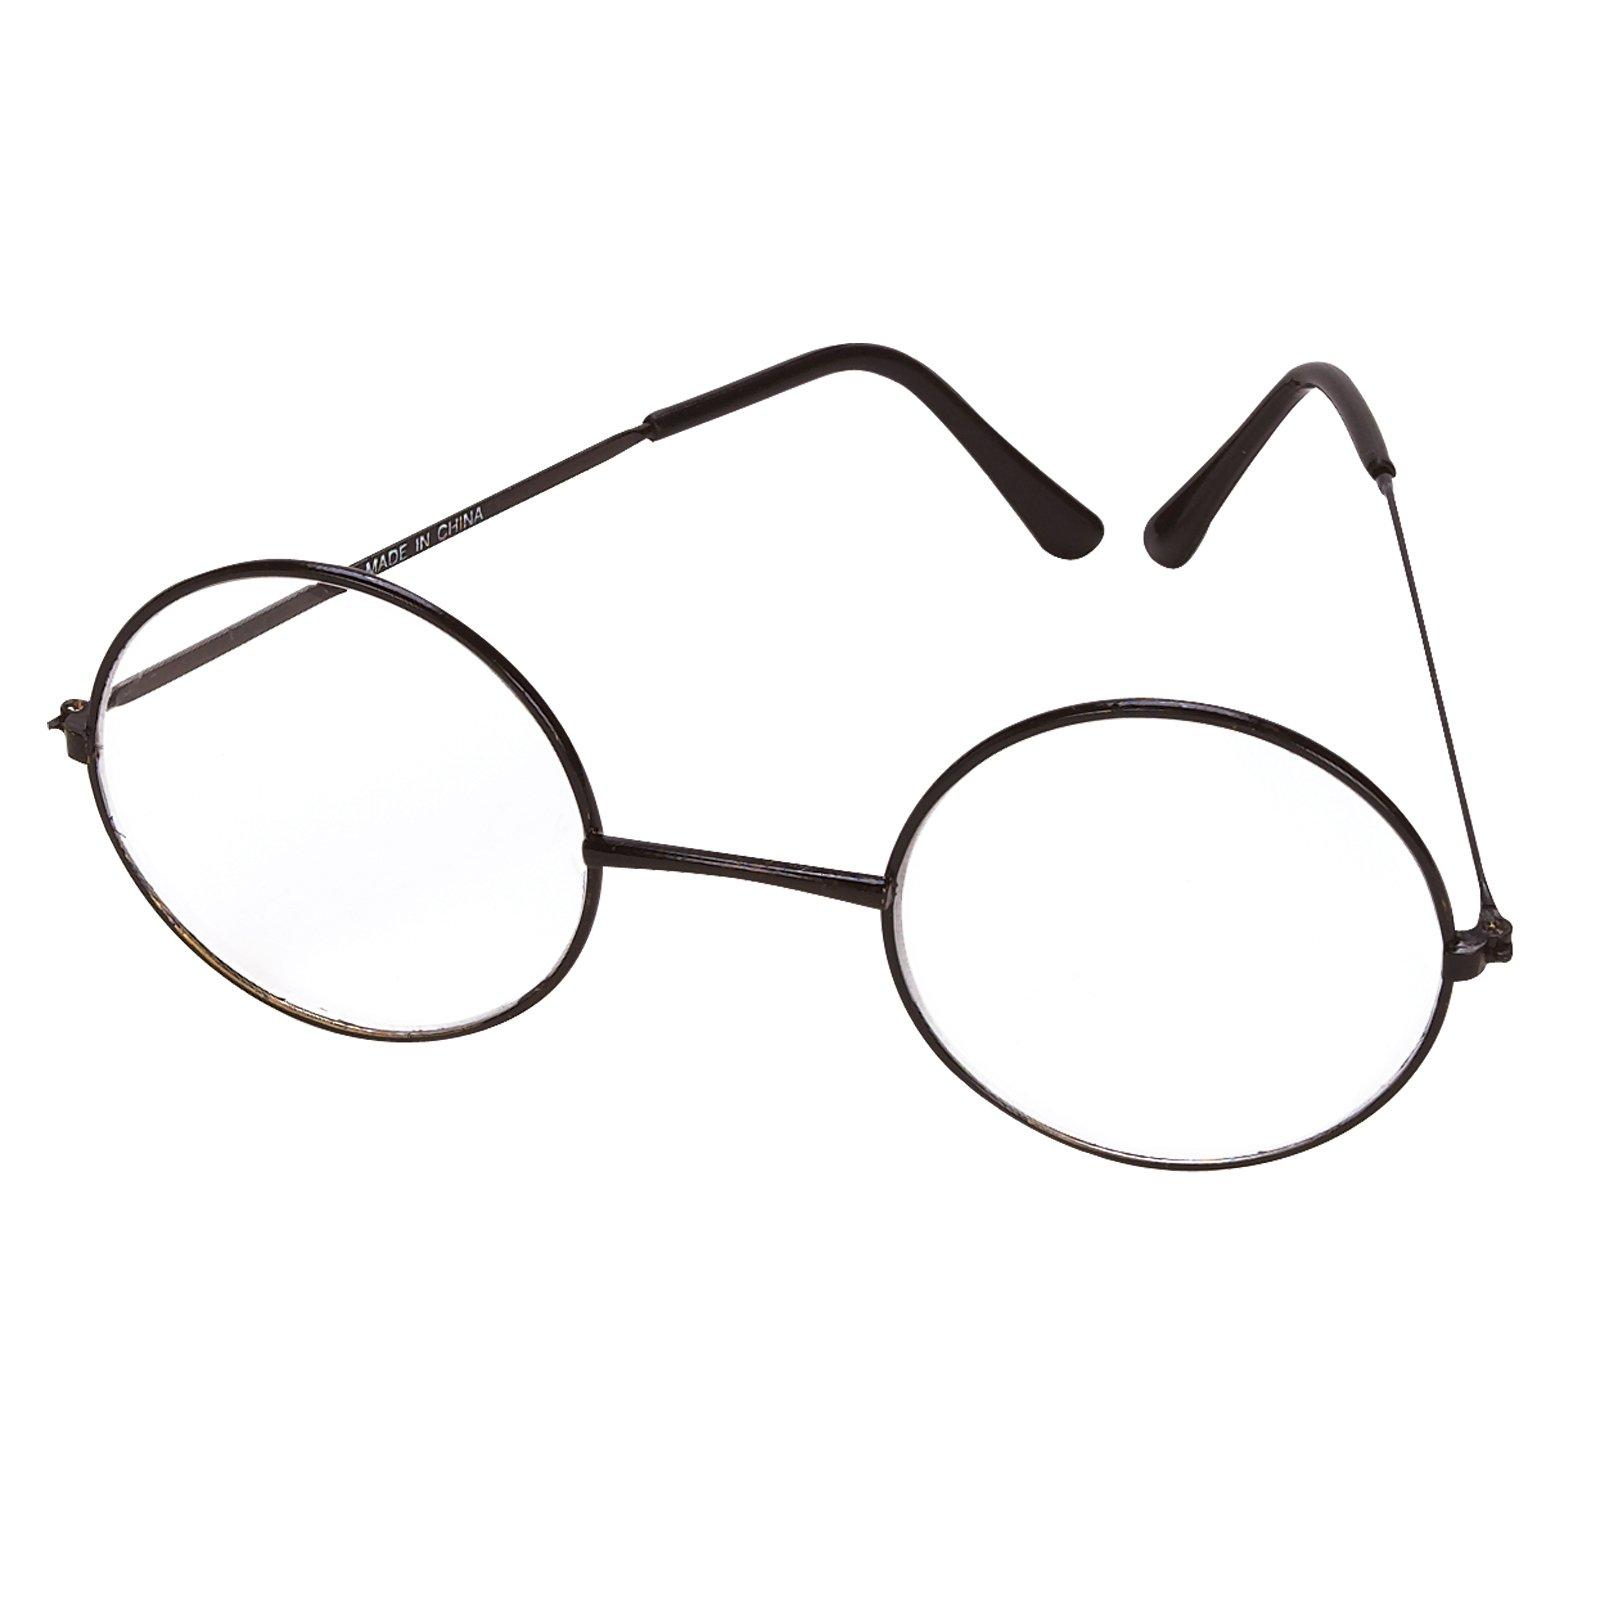 Eyeglasses Clipart 